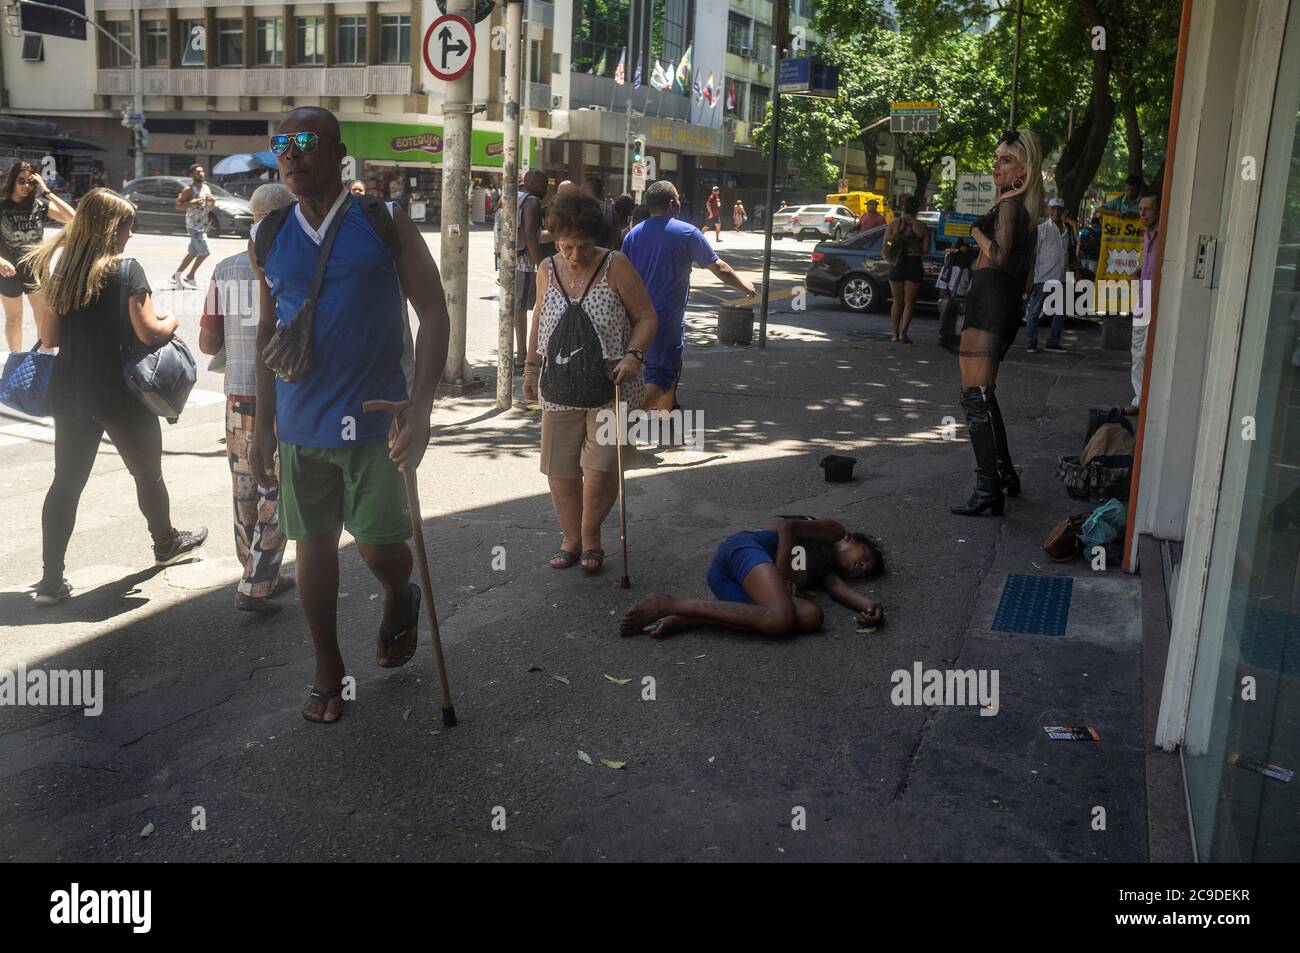 Daily life at Copacabana neighborhood, pedestrians wearing walking sticks pass through a transvestite show and a faint street child sleeping on the floor. Stock Photo